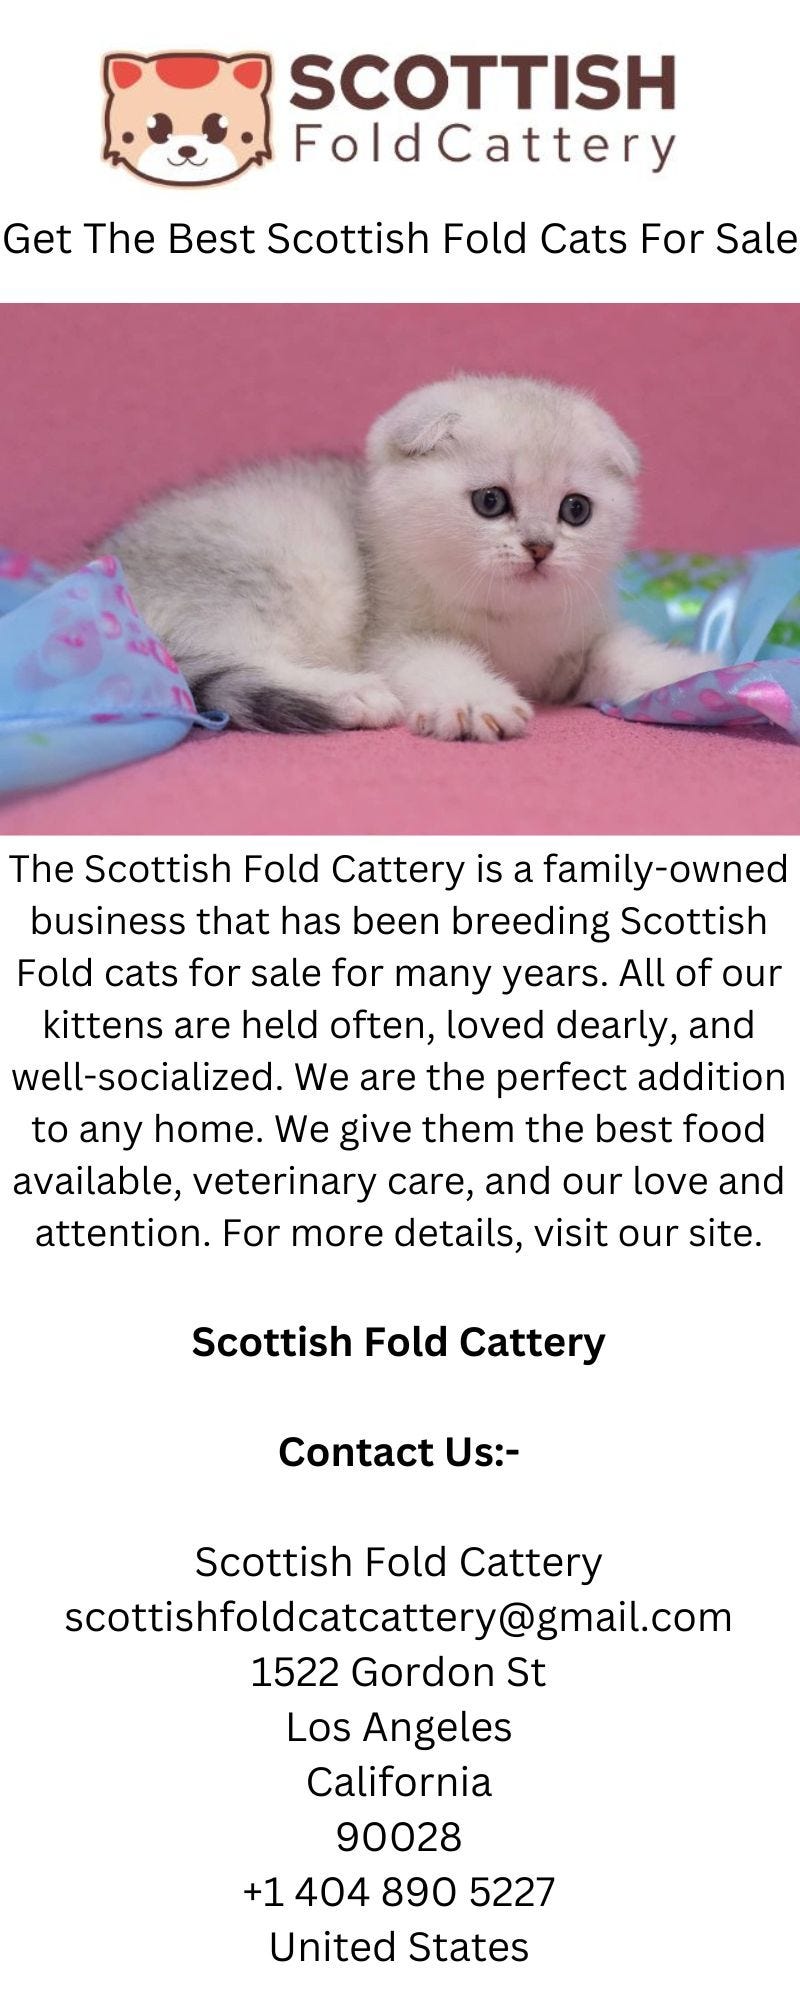 Scottish Fold Cats For Sale - Scottish Fold Cattery